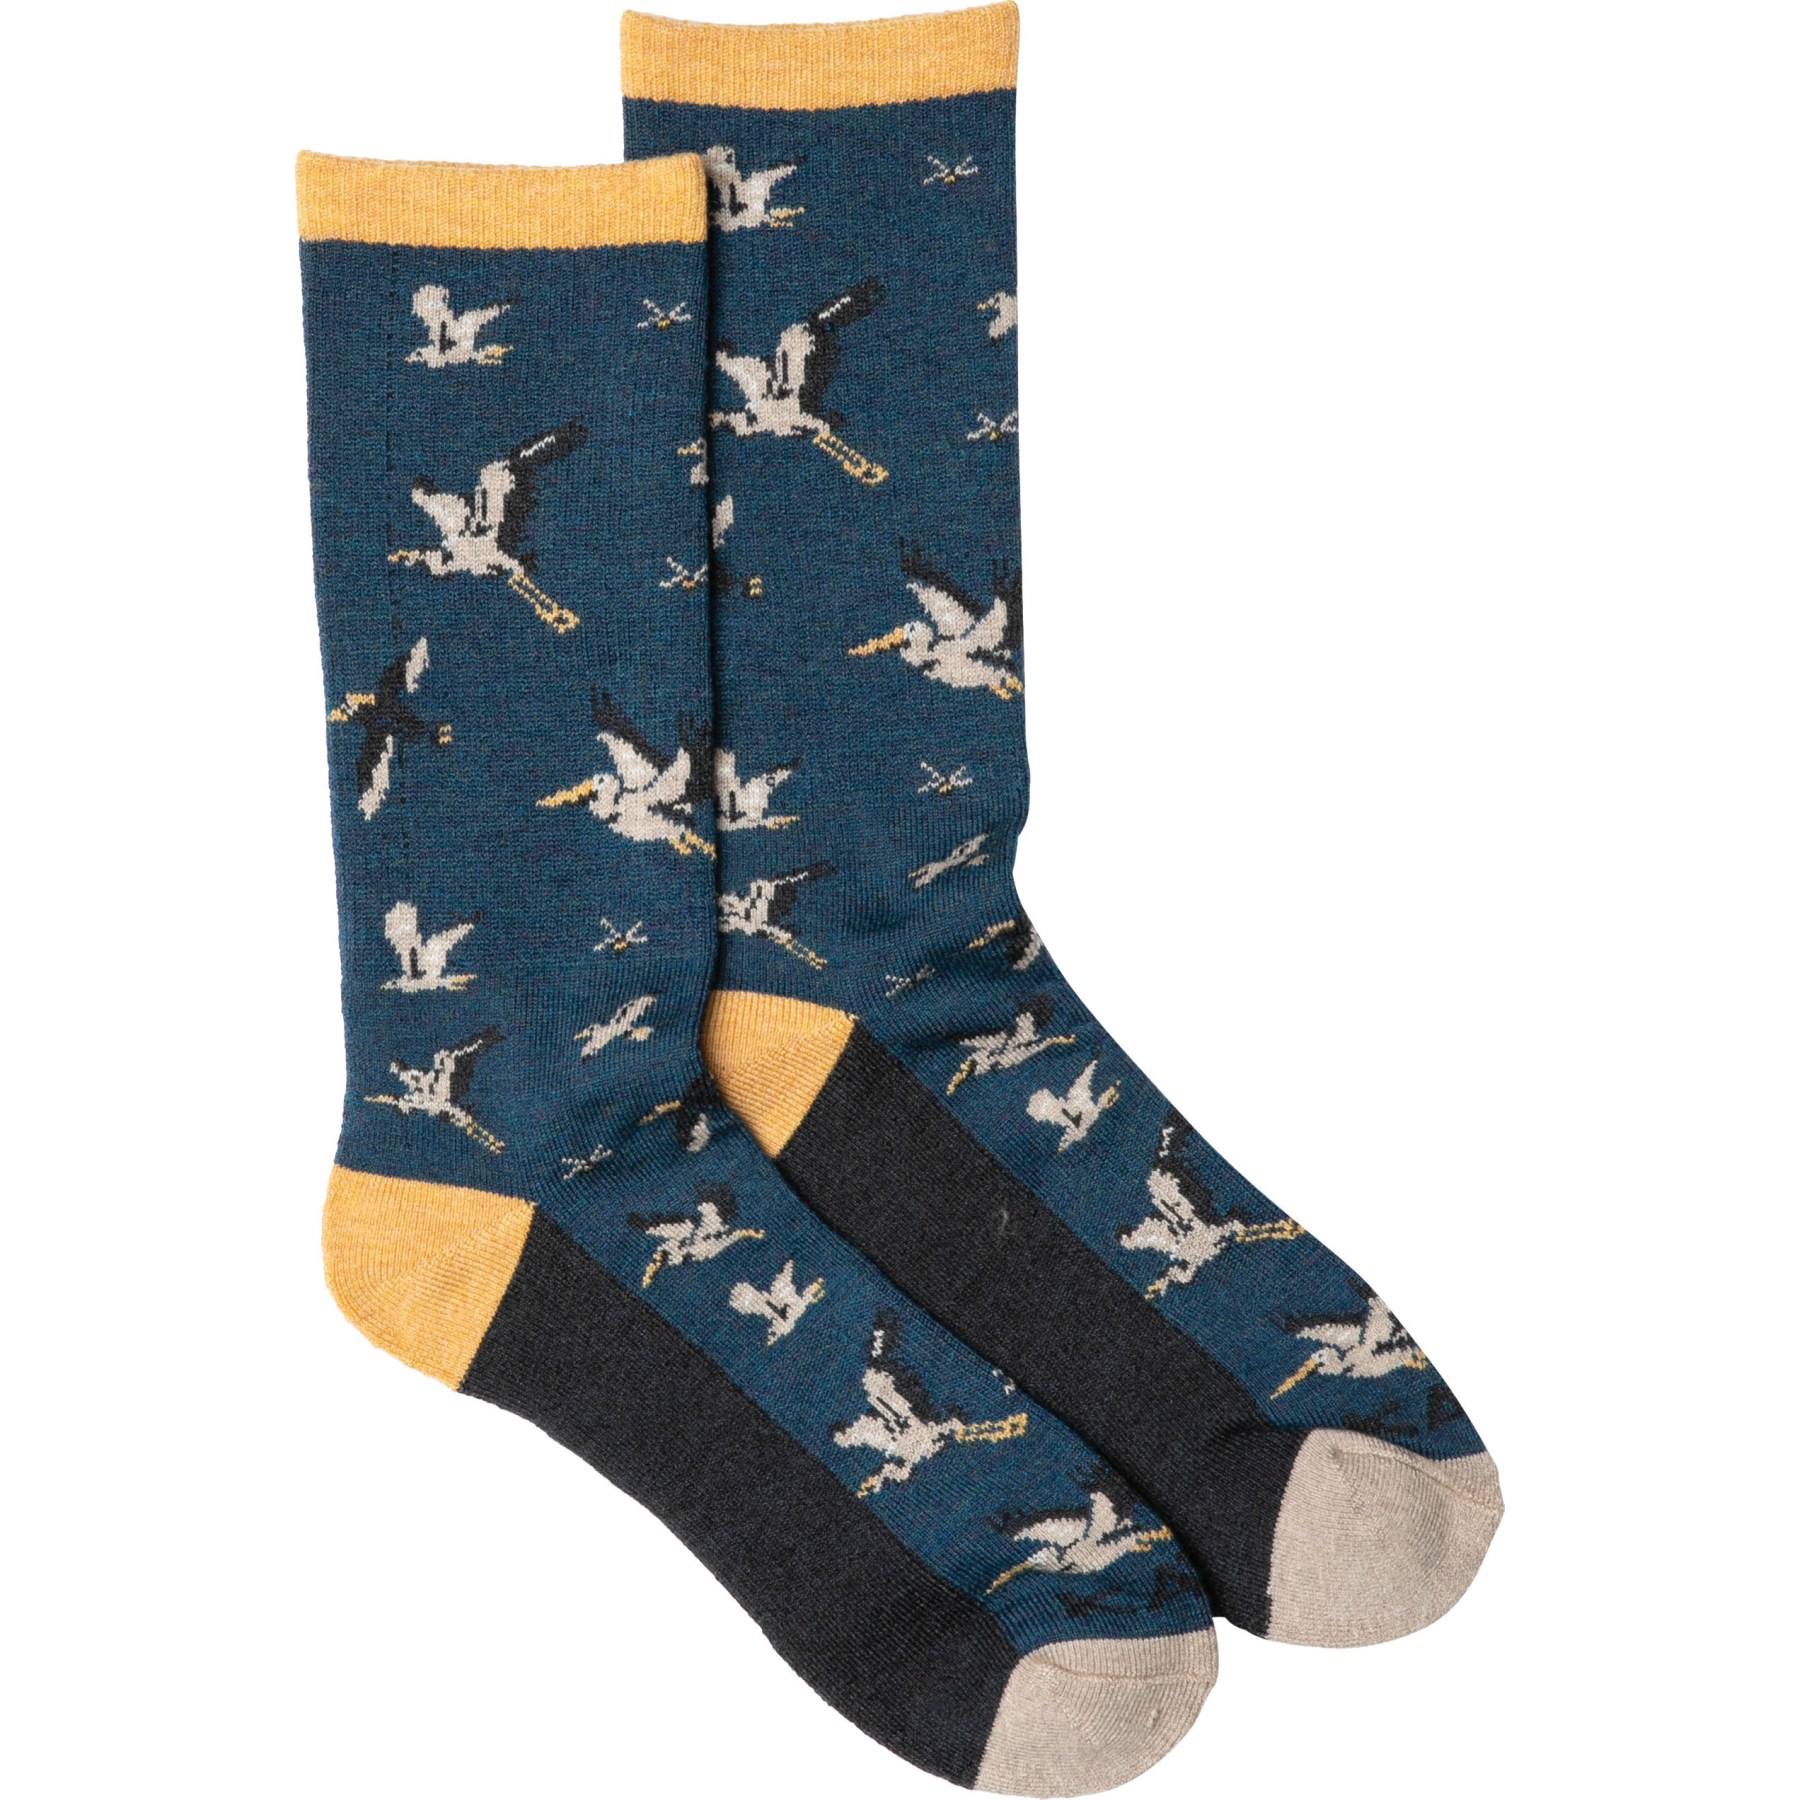 Picture of KAVU Moonwalk Socks - Angling Flock